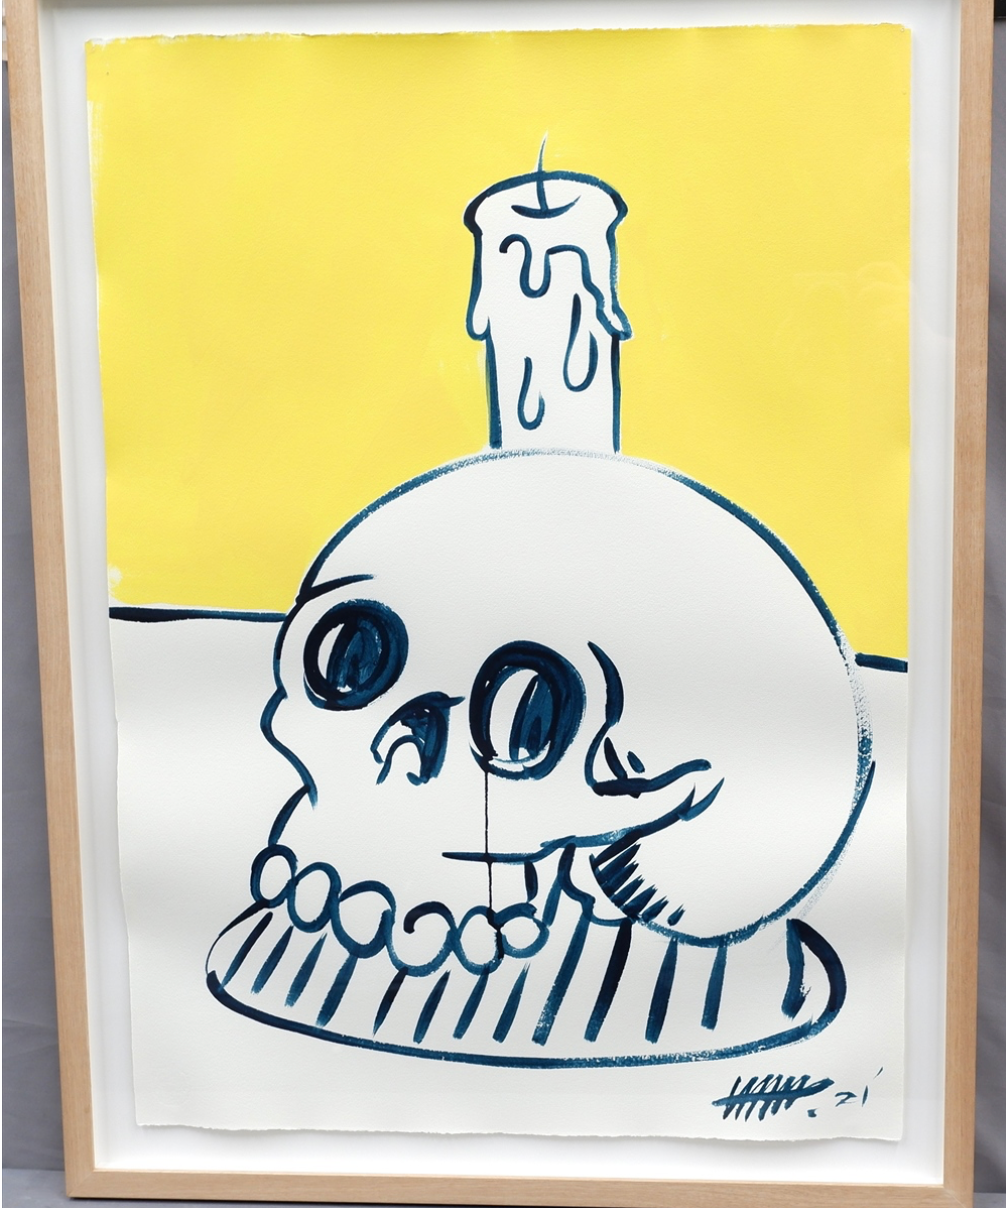 Takeru Amano - Candle and Skull, 2021